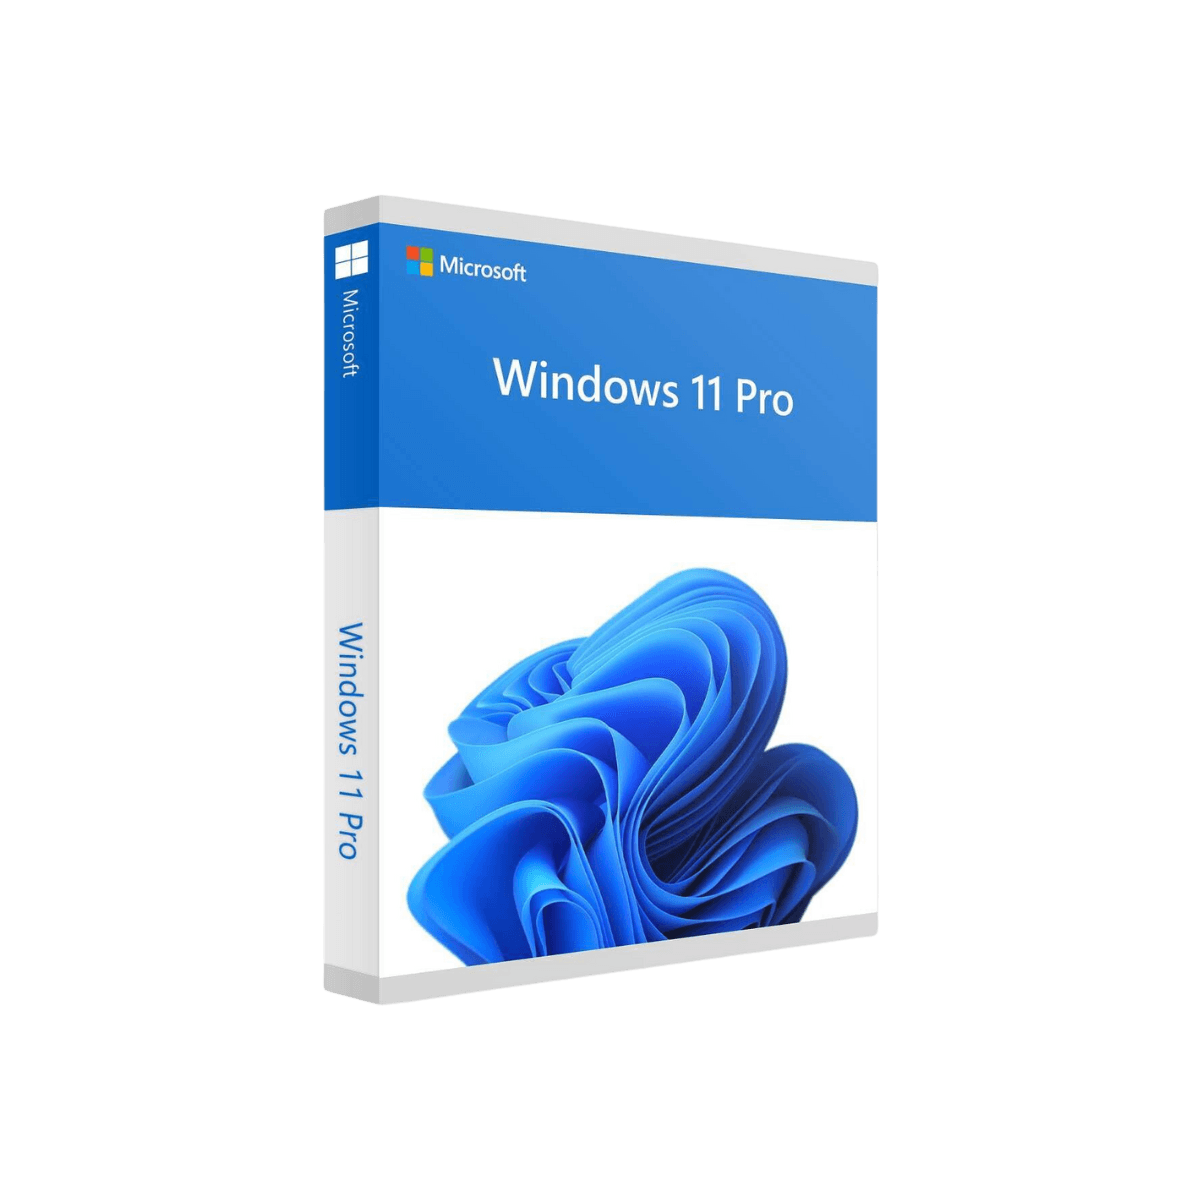 Microsoft Windows 11 Professional - validvalley.com - Chave do produto, Chiave del prodotto, Clave del producto, Product Key, Produktschlüssel, Ürün Anahtarı